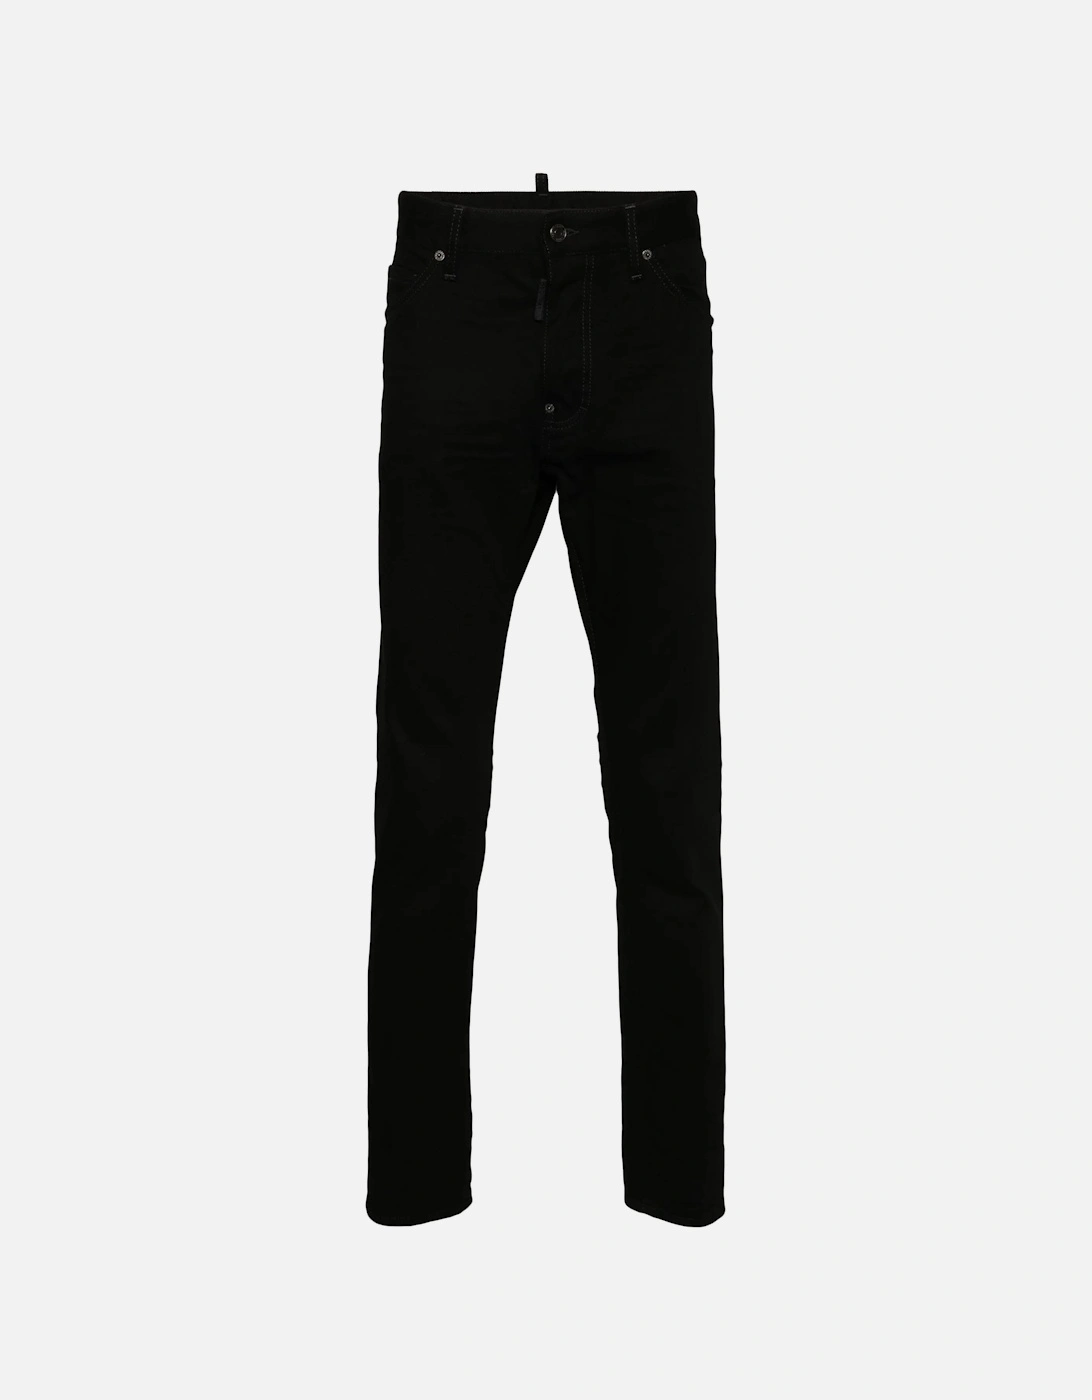 Cool Guy Solid Black Jeans Black, 8 of 7